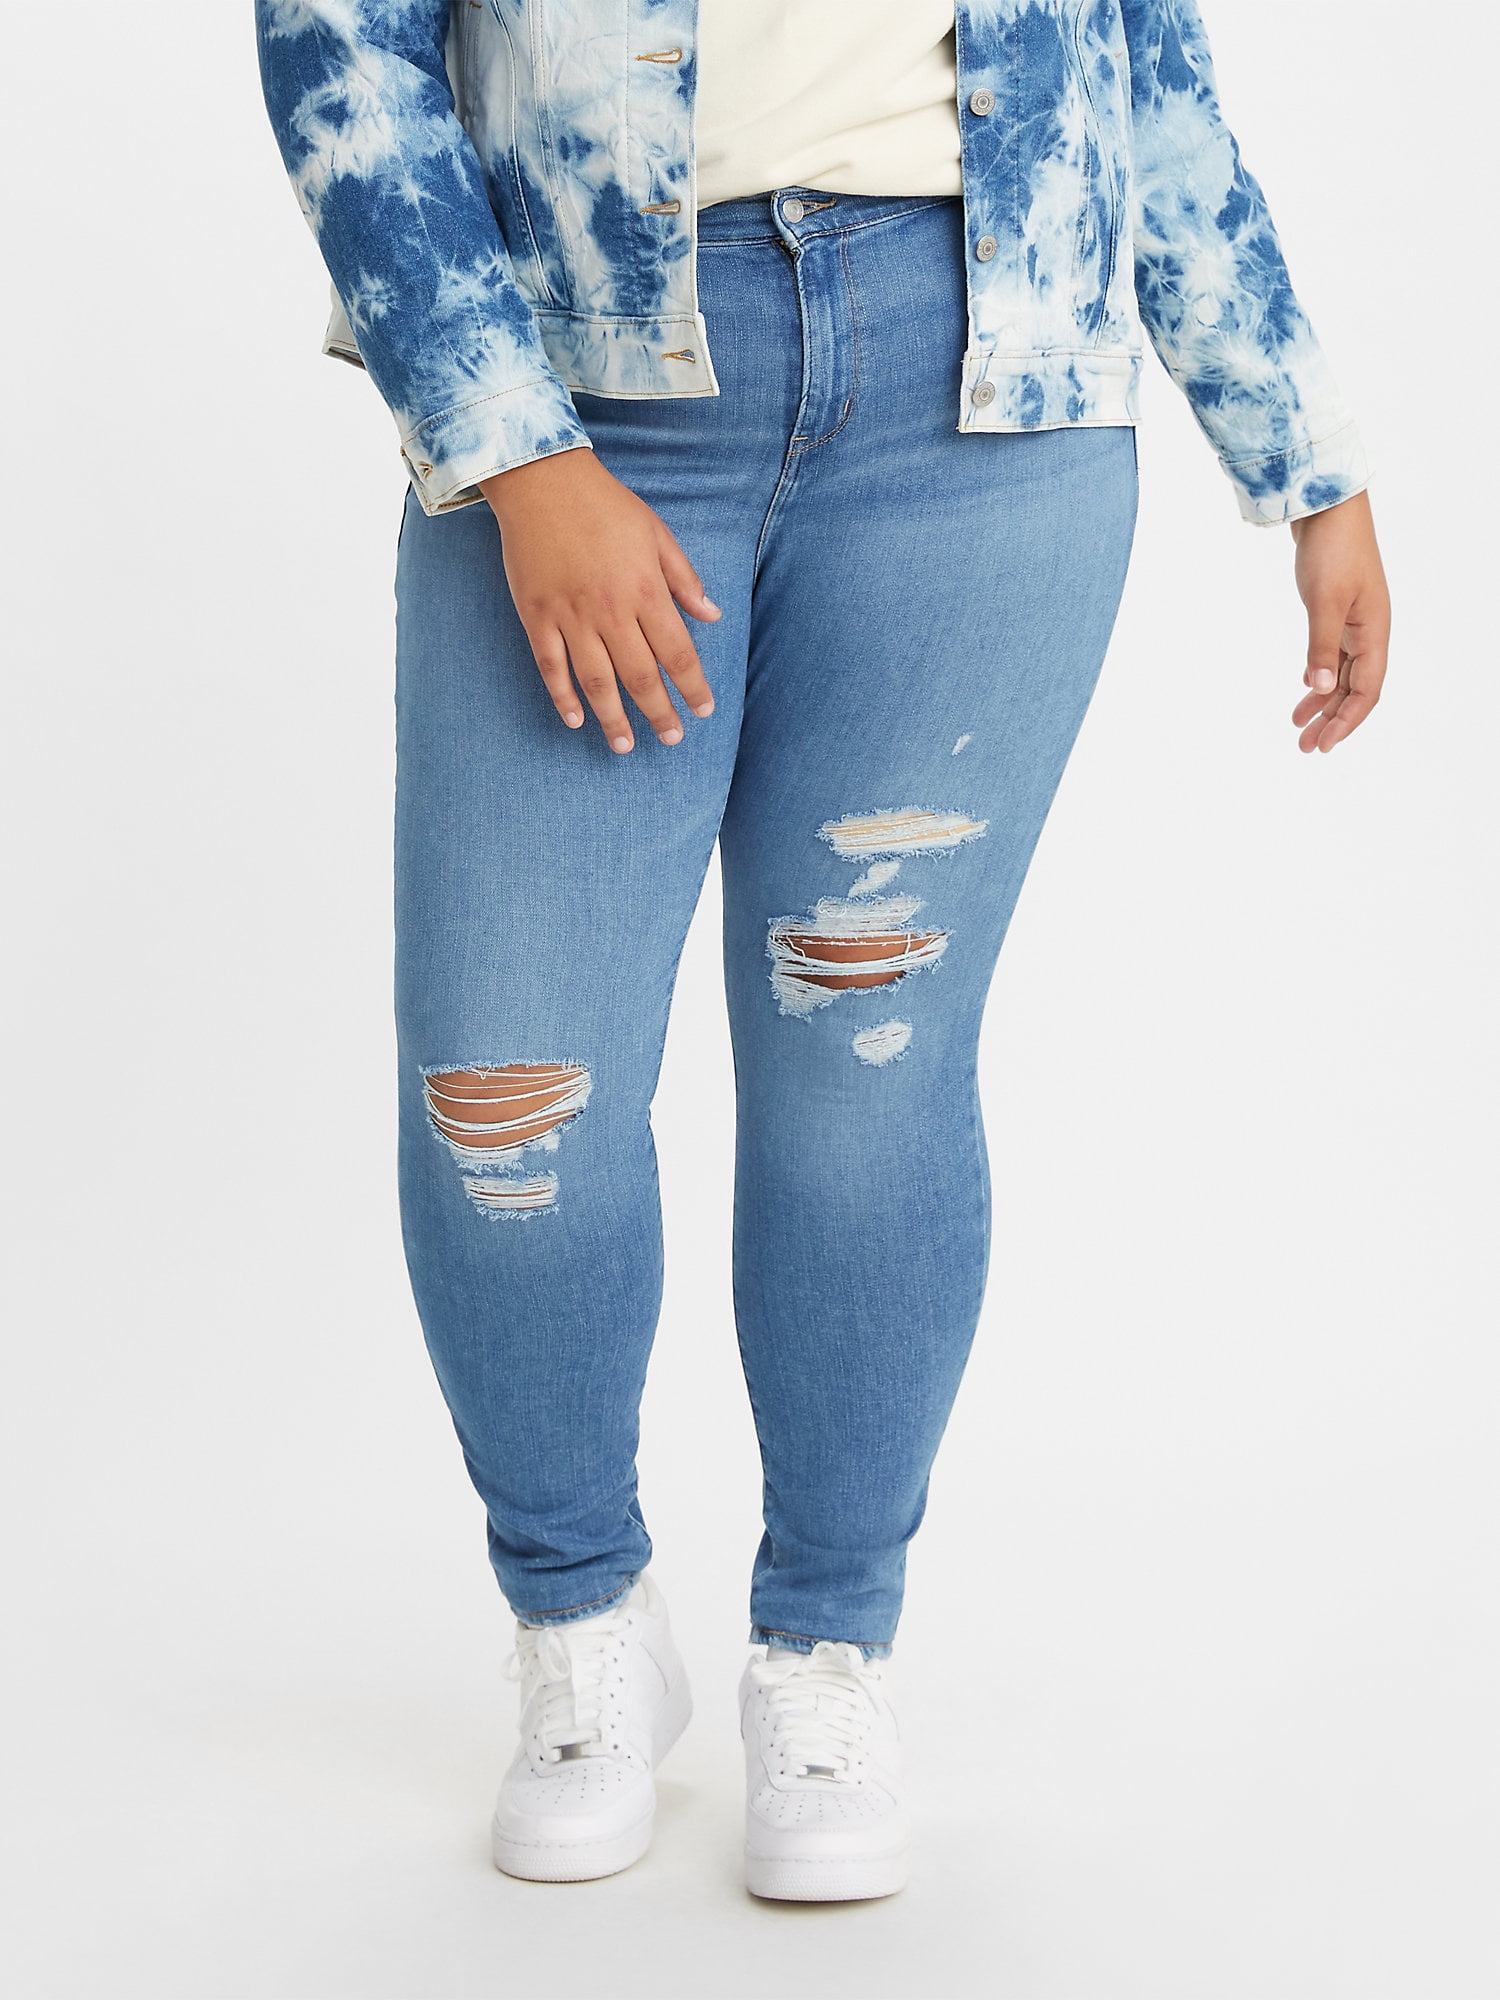 Levi's Women's Plus Size 721 High-Rise Skinny Jean 